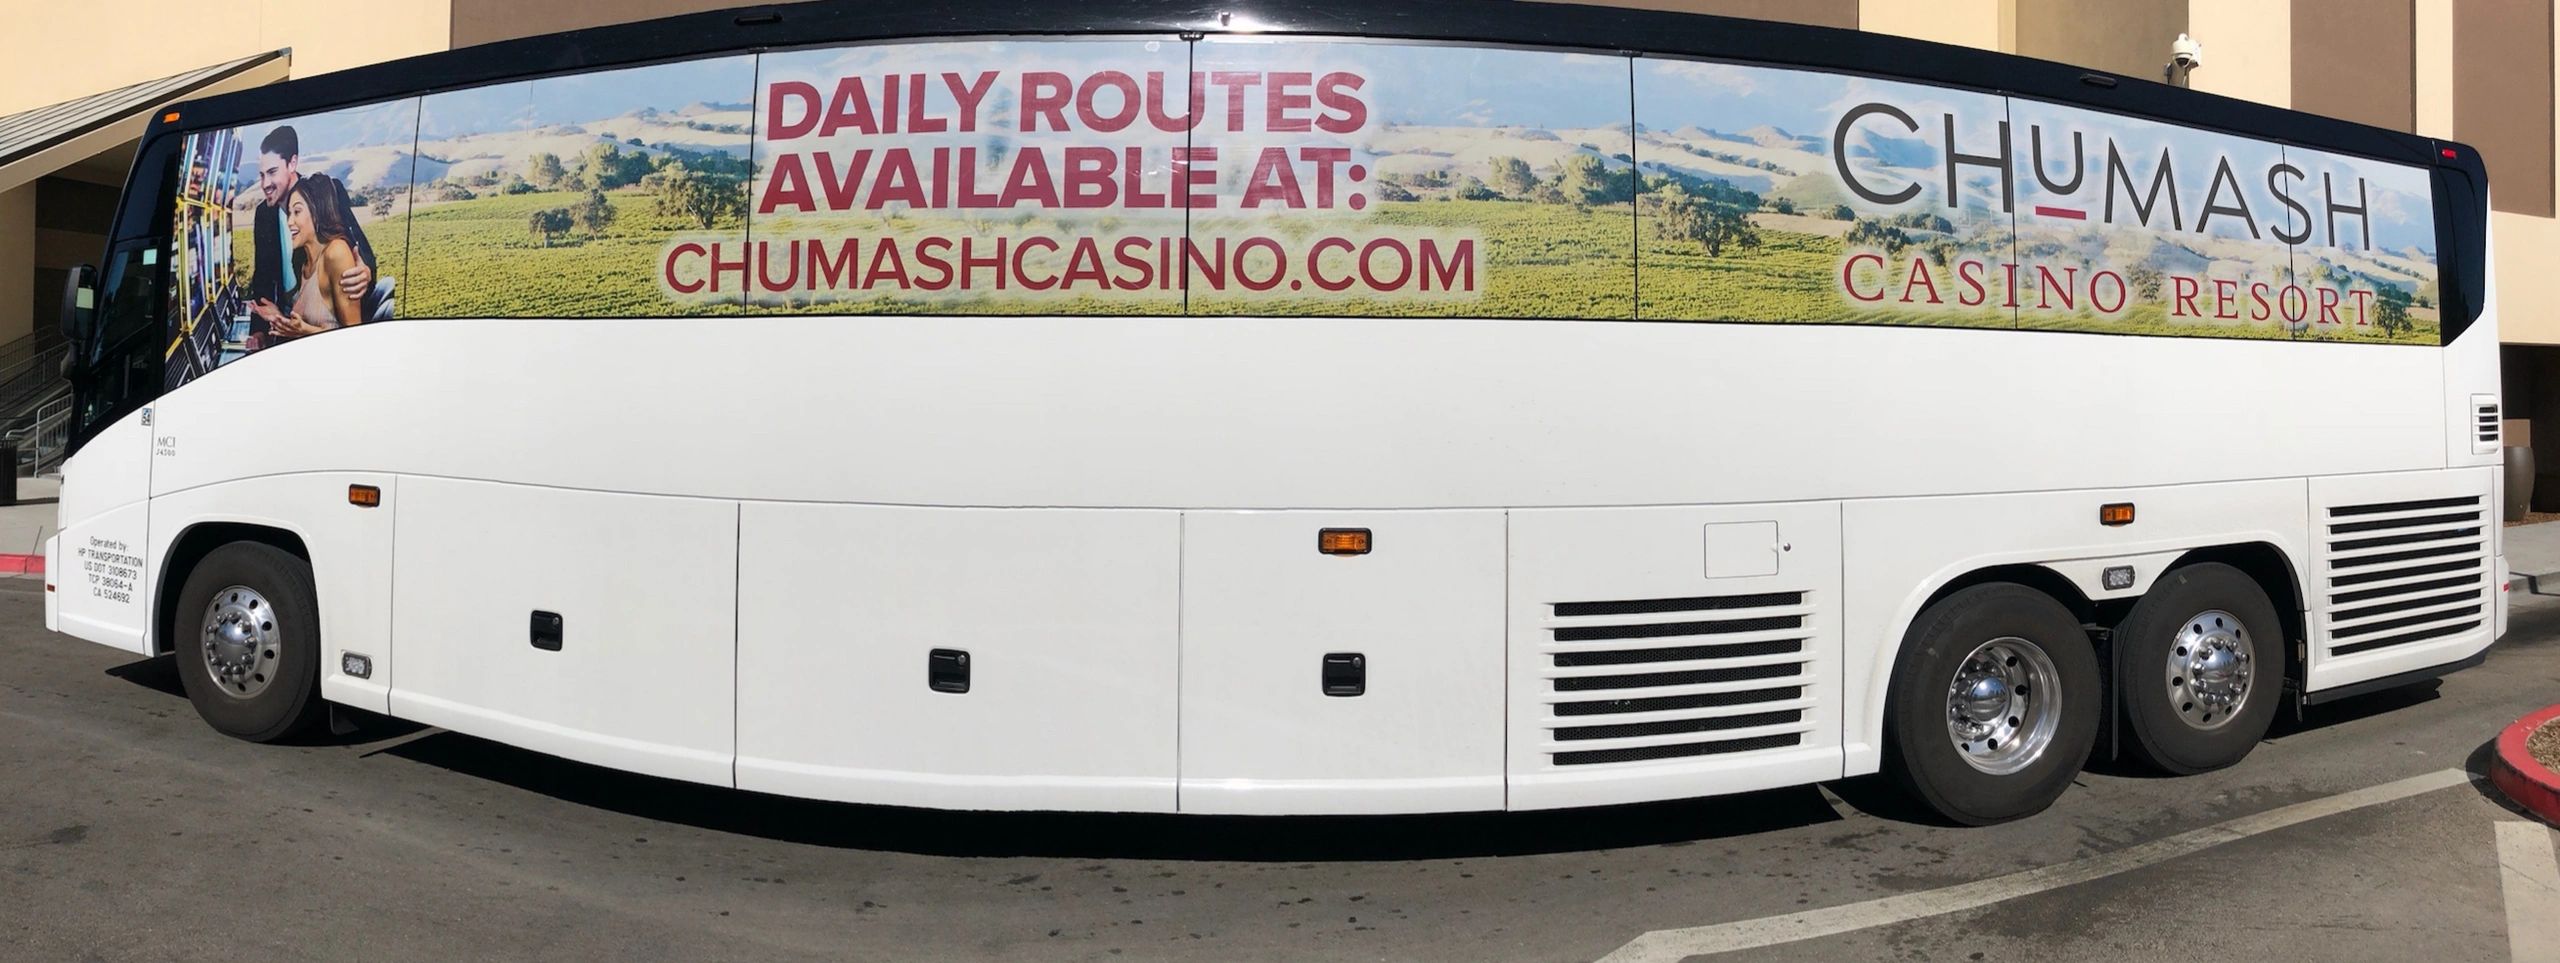 winstar world casino shuttle bus schedule